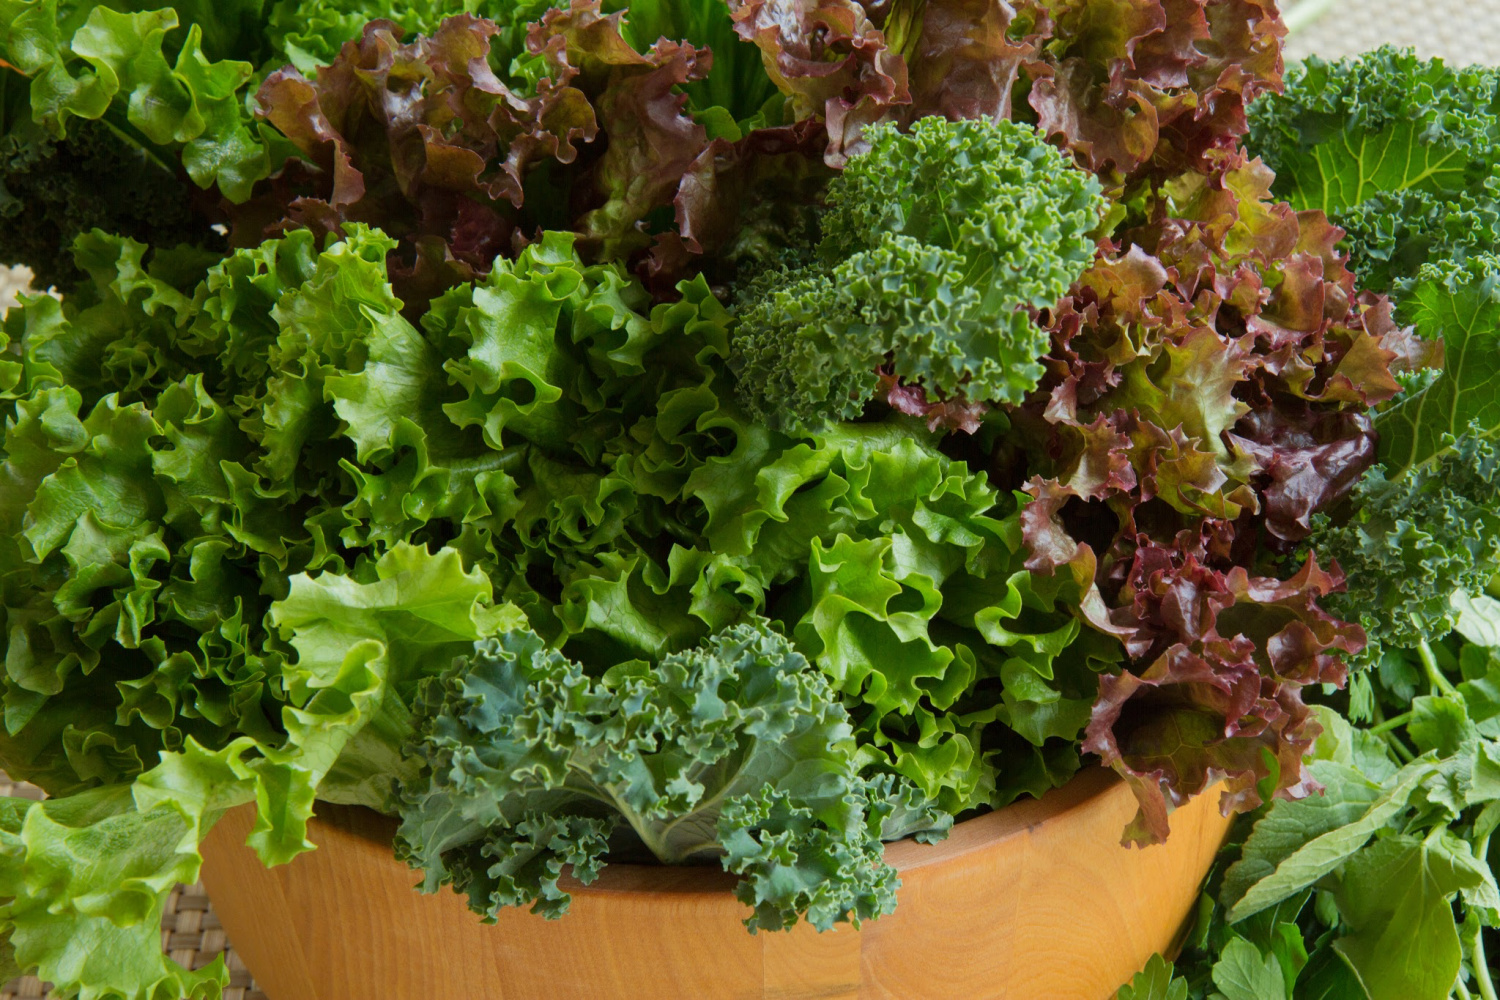 Grow a salad garden in a planter to enjoy veggies on your back porch